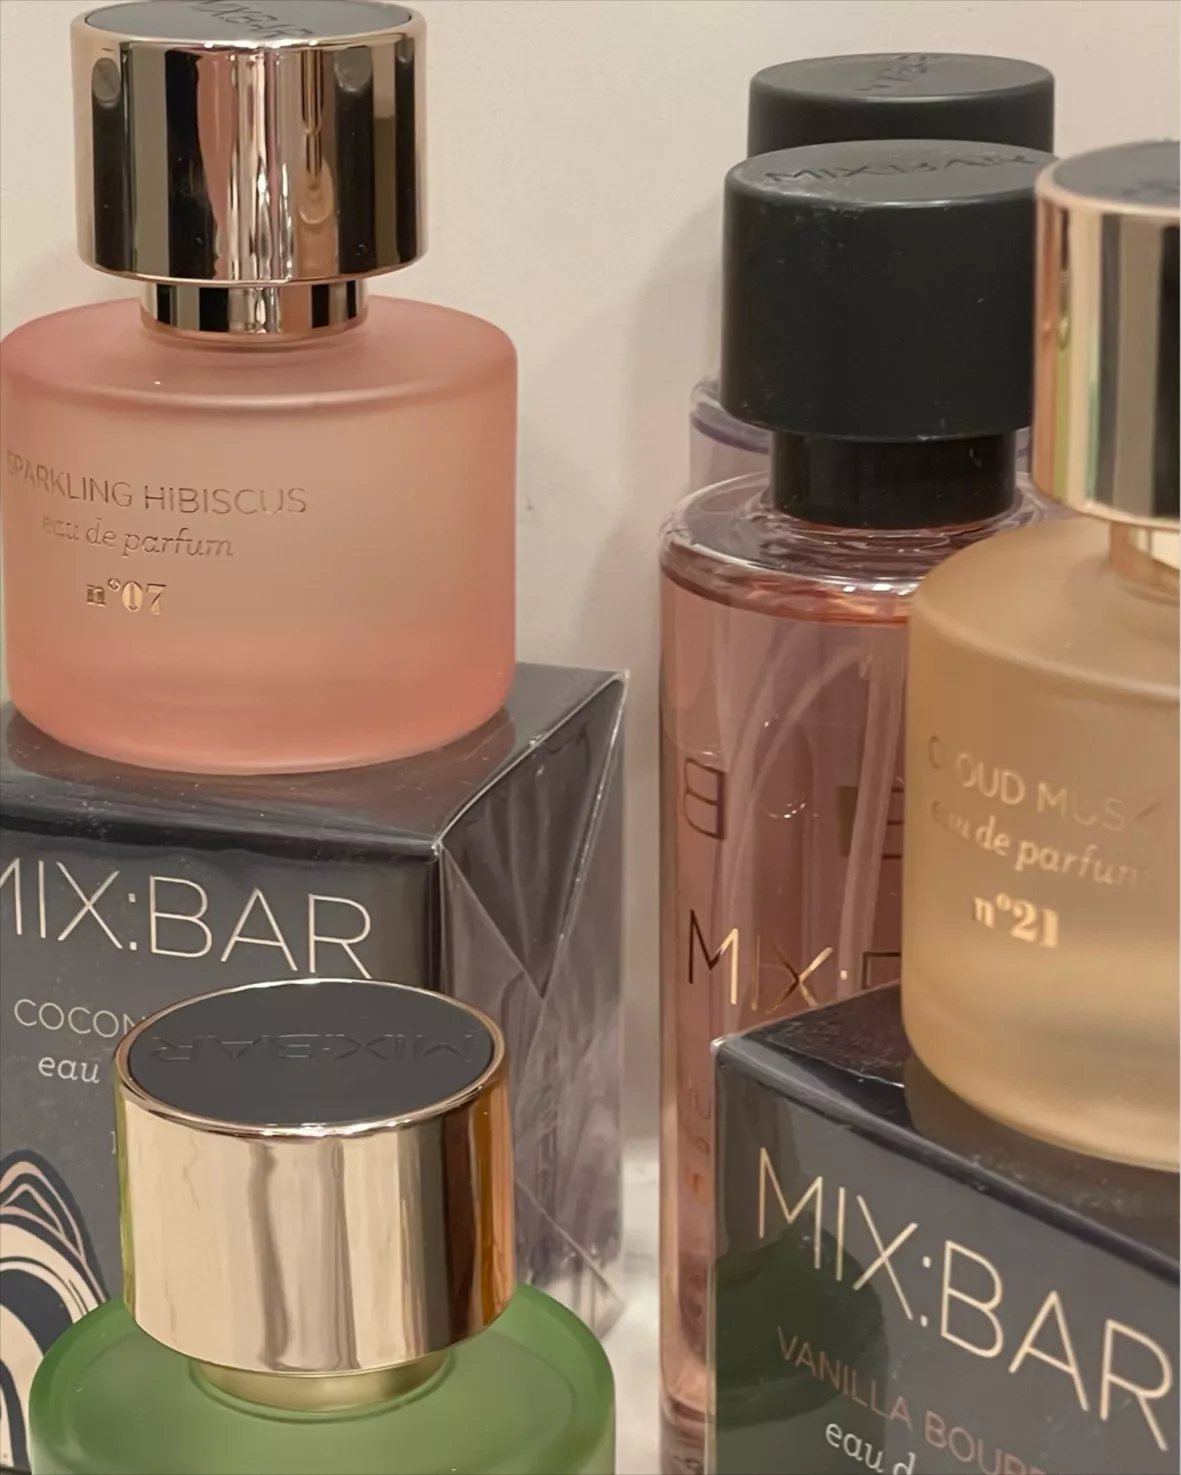 MIX:BAR Cloud Musk Eau de Parfum - … curated on LTK